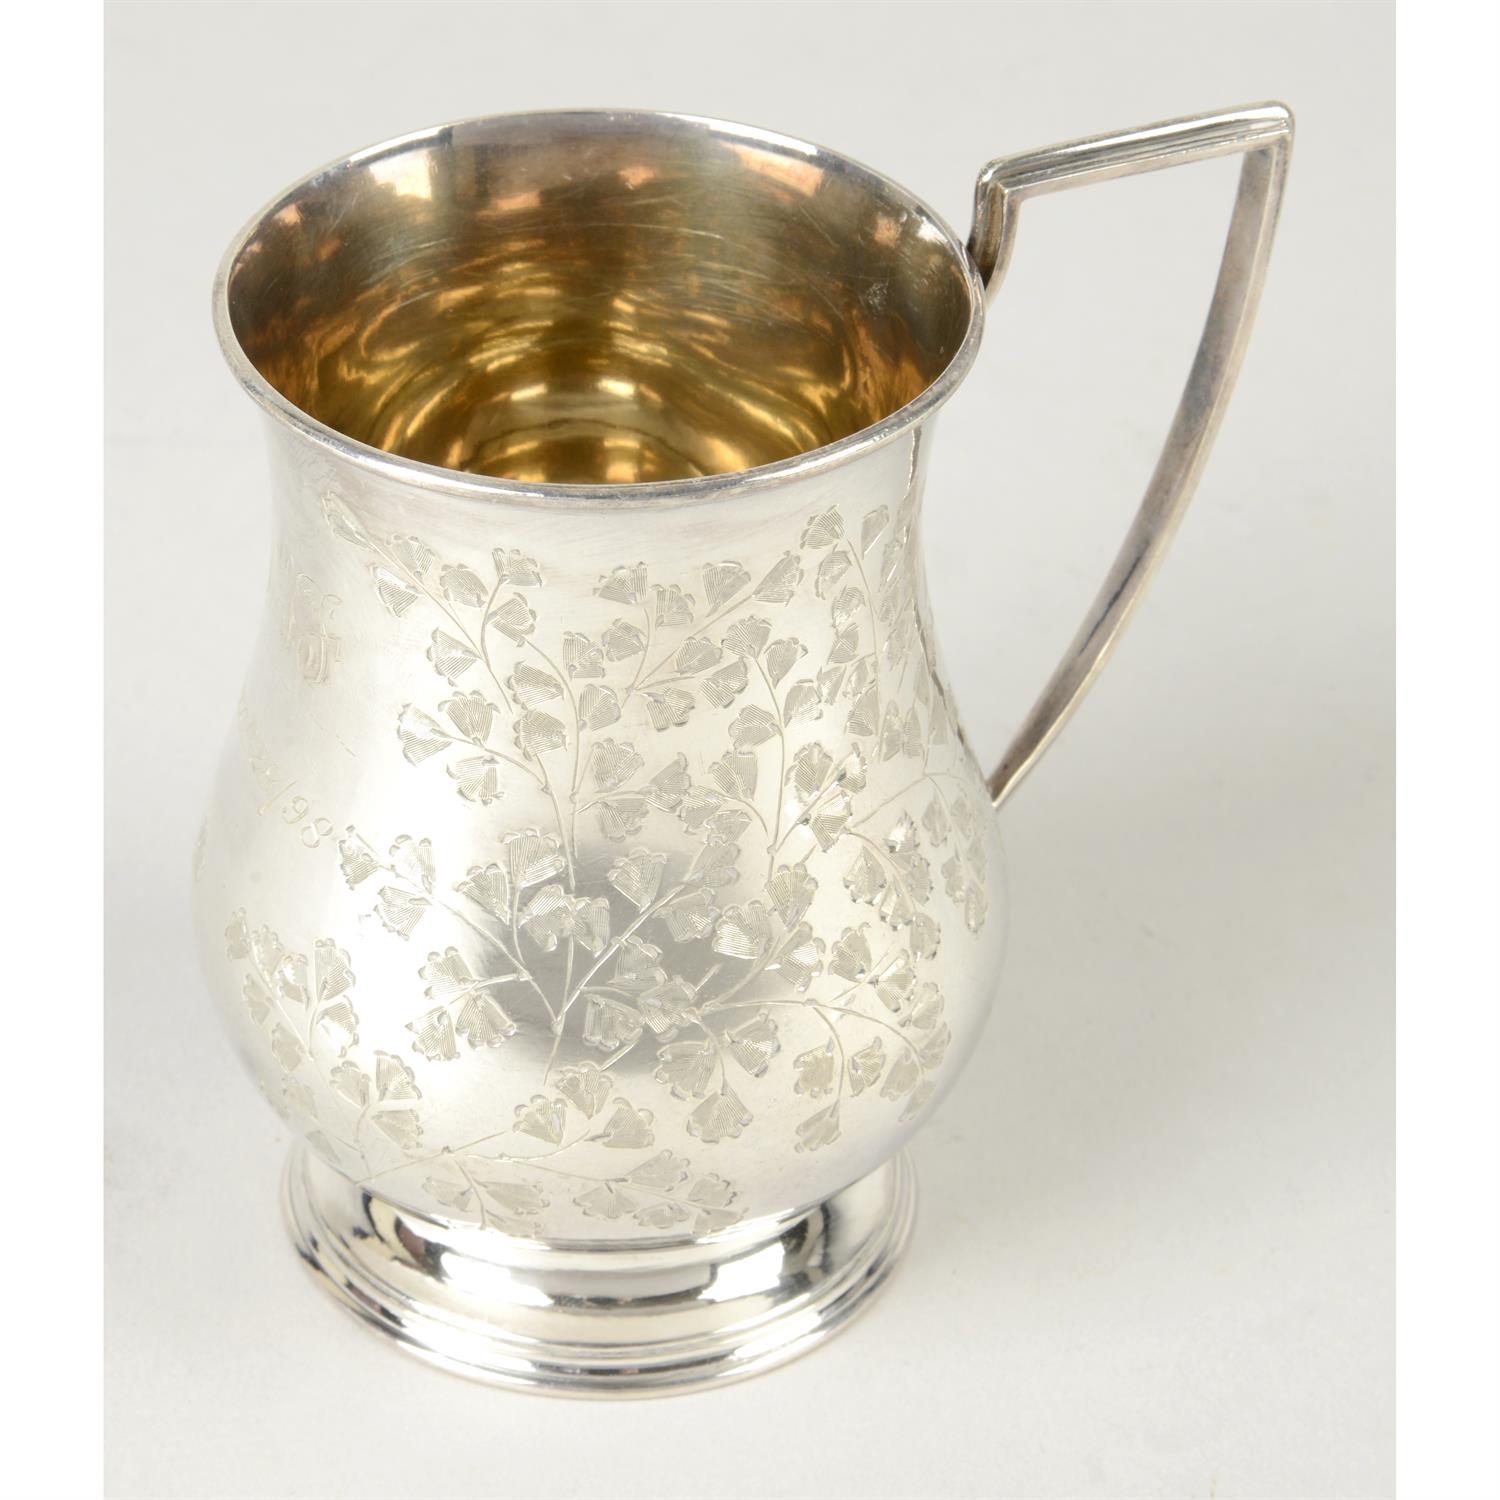 Late Victorian silver christening mug.